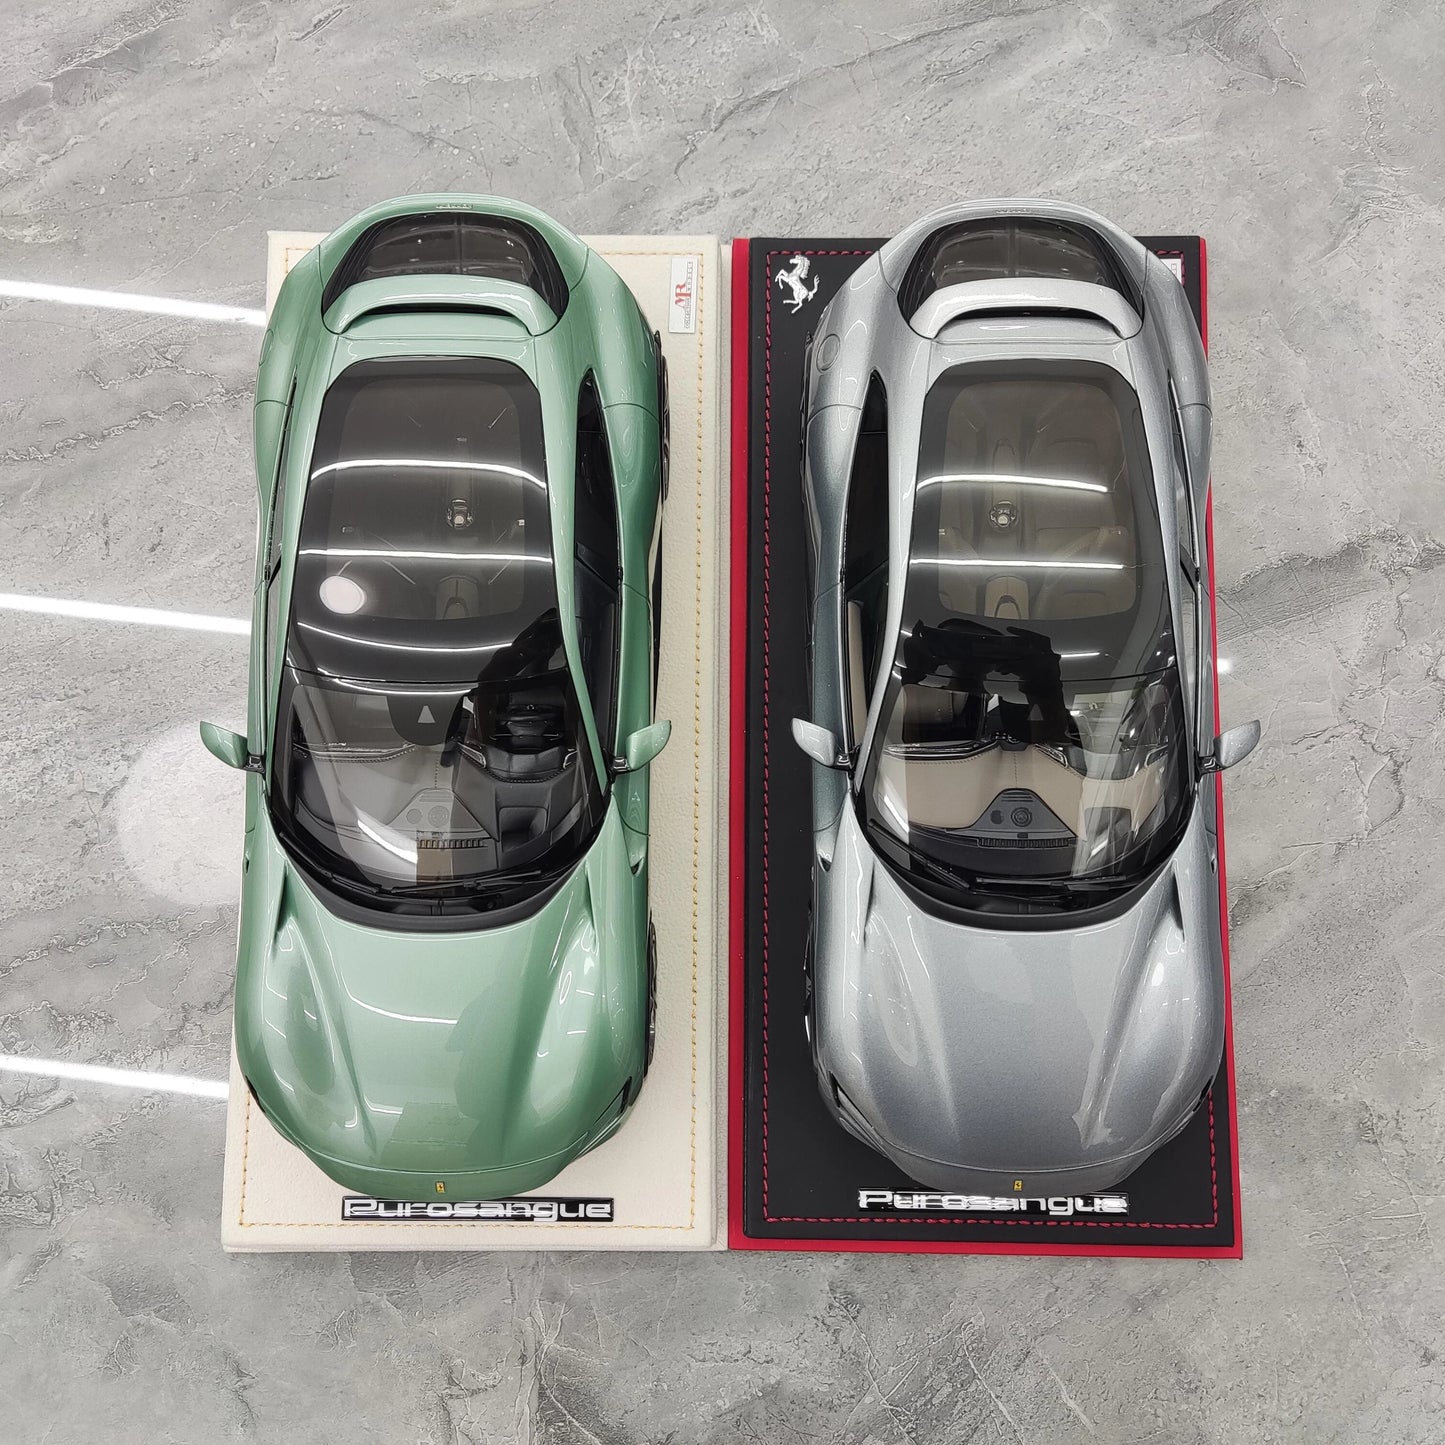 Ferrari Purosangue V12 SUV Limited Edition Car Model 1/18 Scale